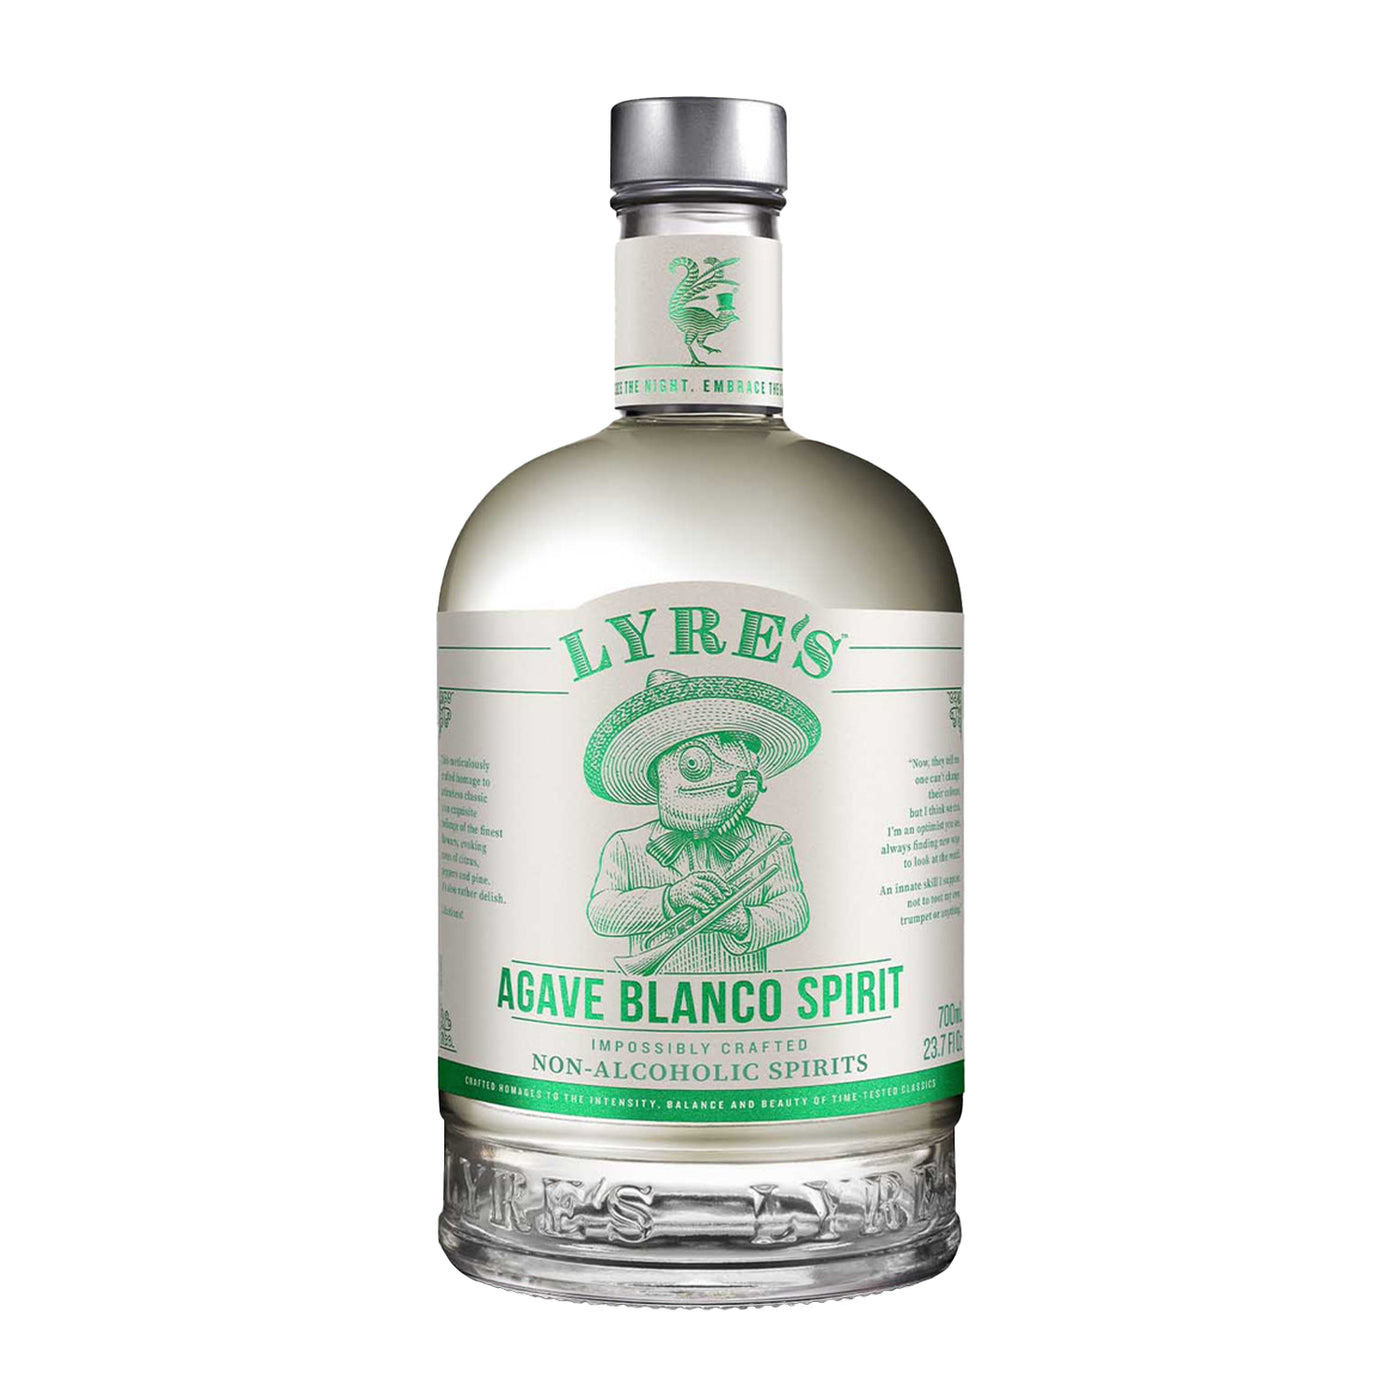 Lyre's non-alcoholic tequila